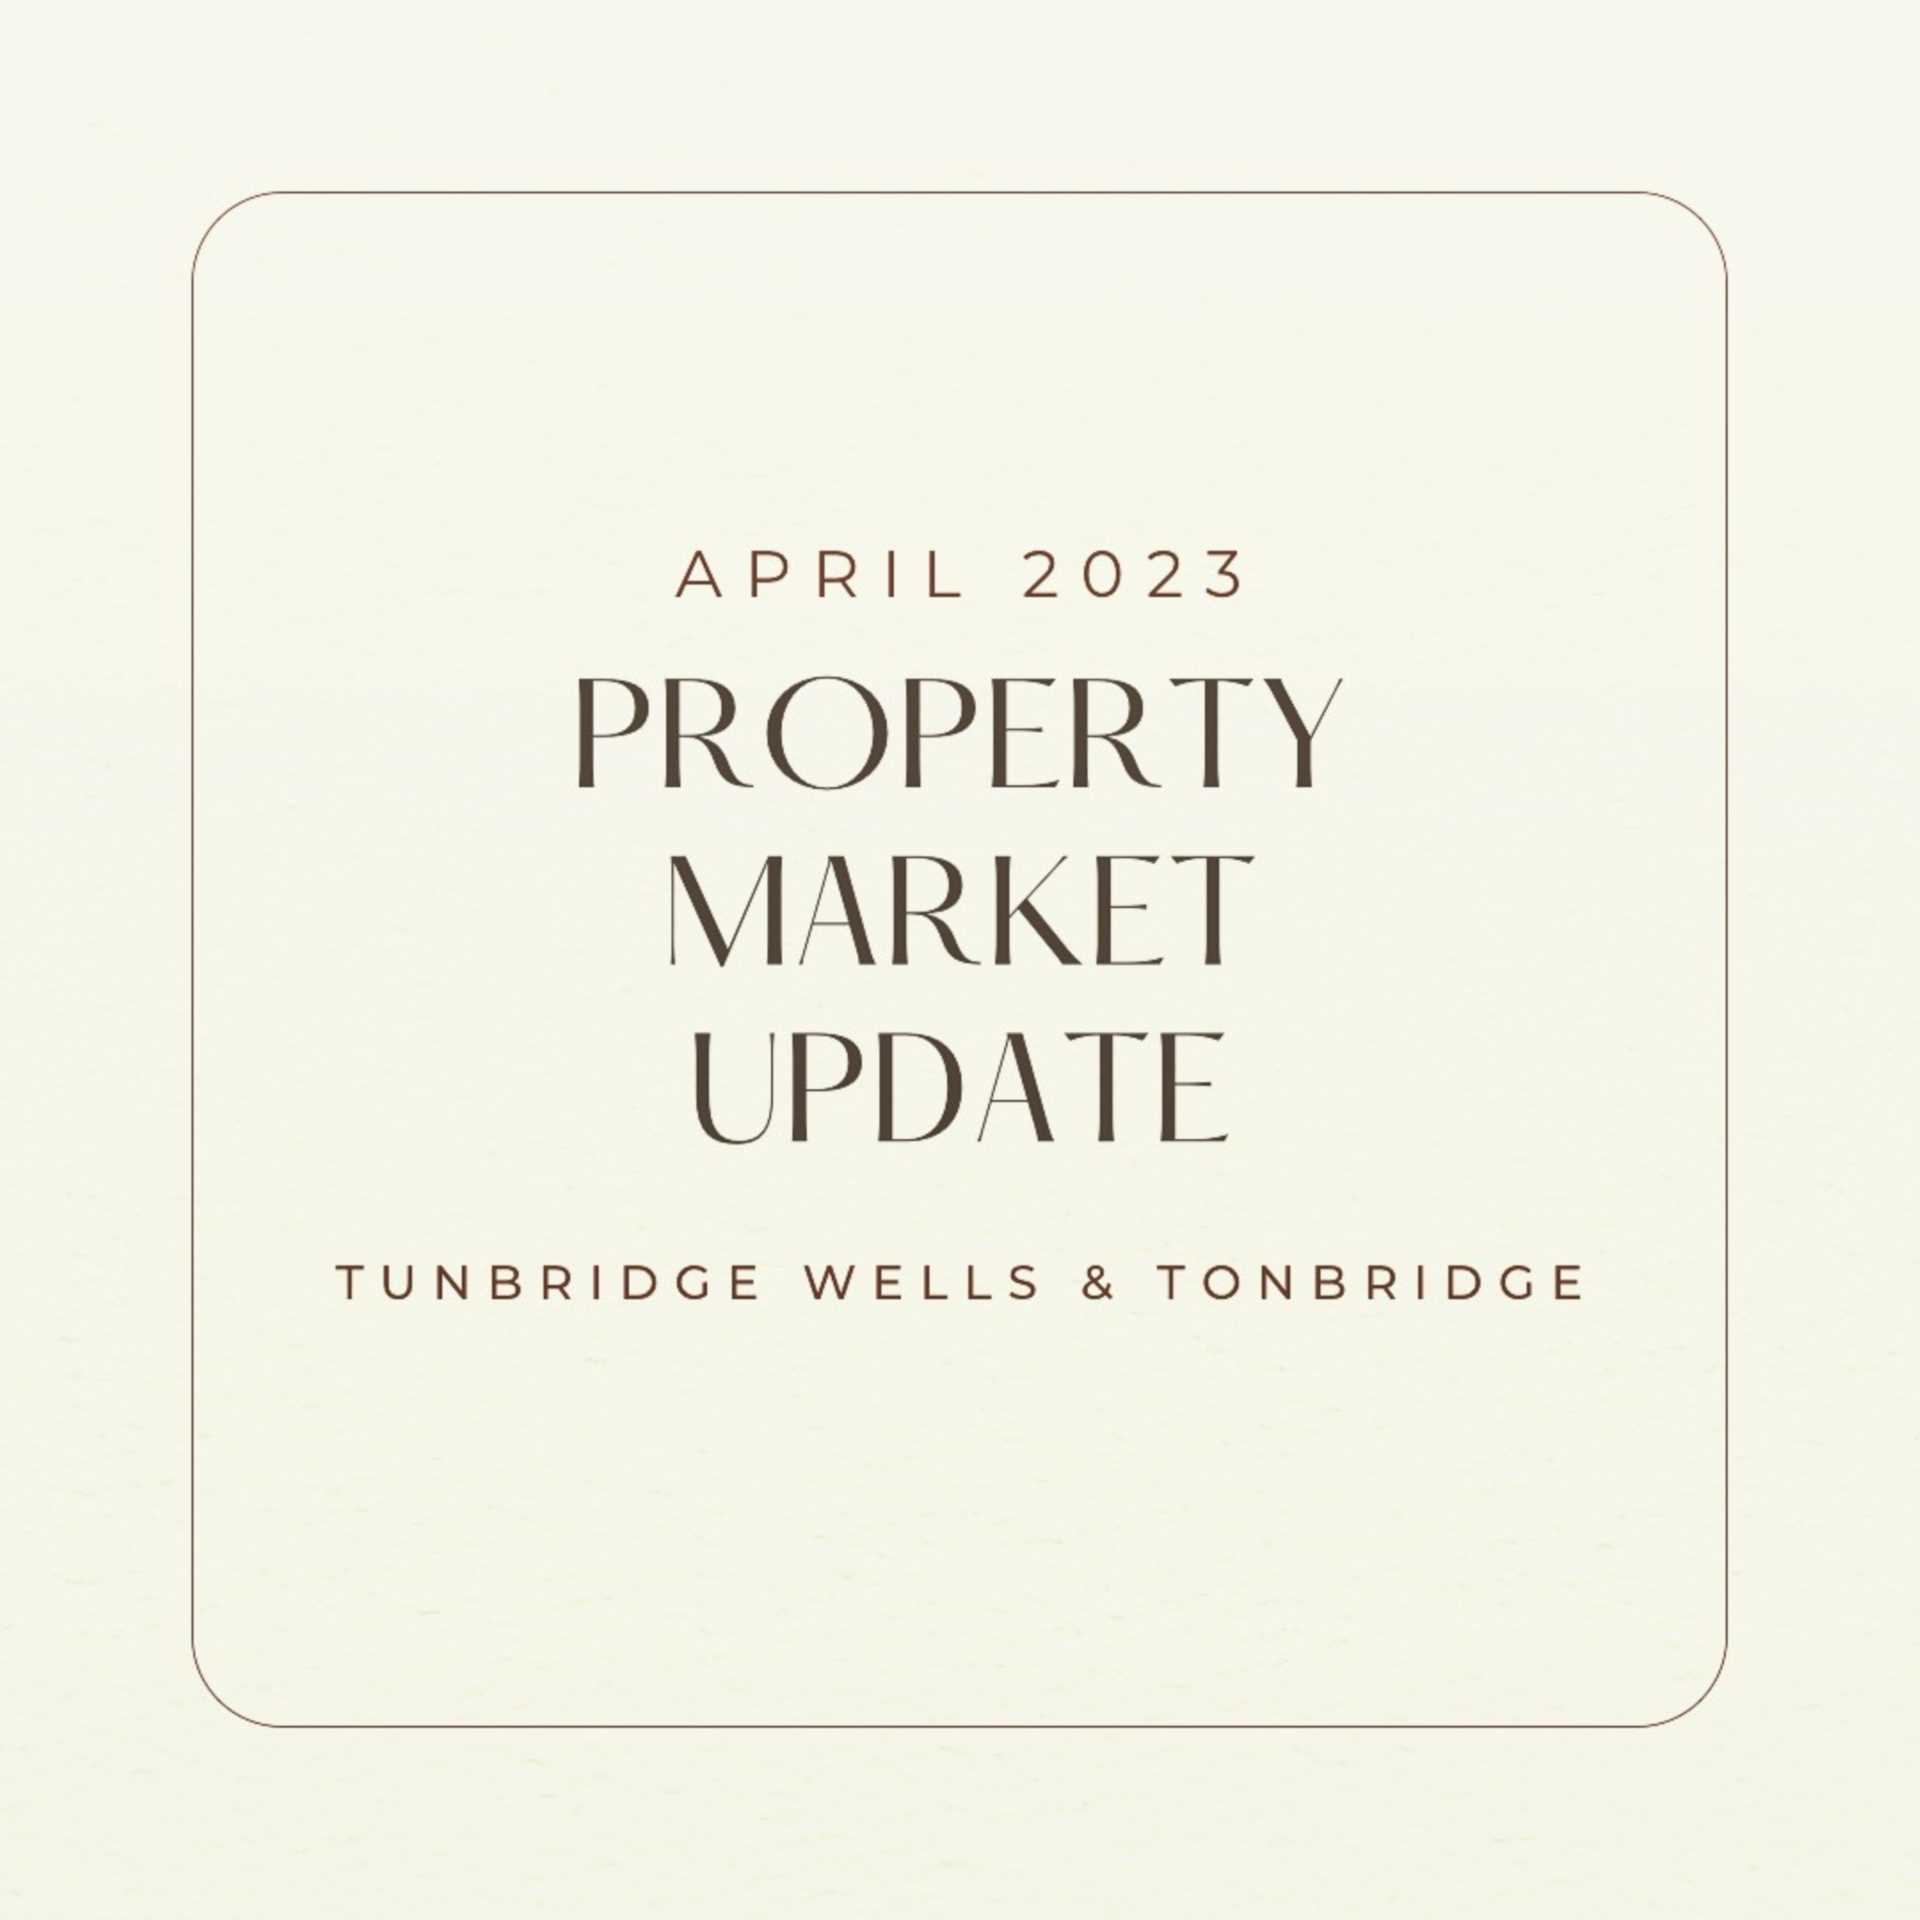 APRIL 2023 PROPERTY MARKET UPDATE (Tonbridge and Tunbridge Wells)